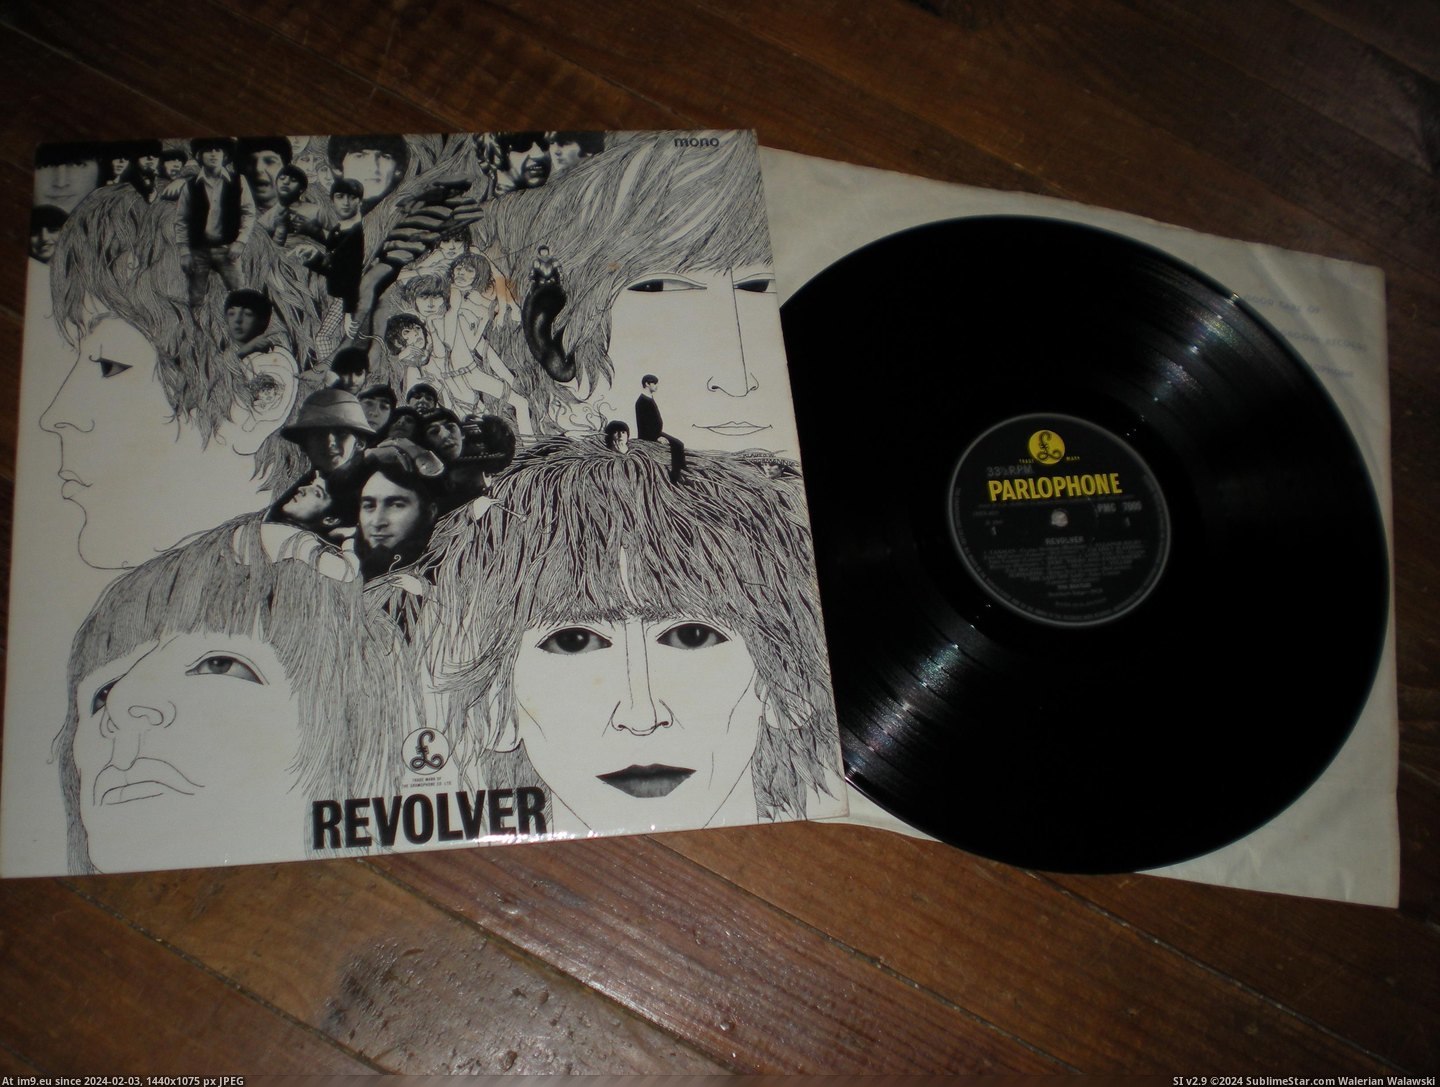  #Revolver  Revolver -2-3 2 Pic. (Изображение из альбом new 1))